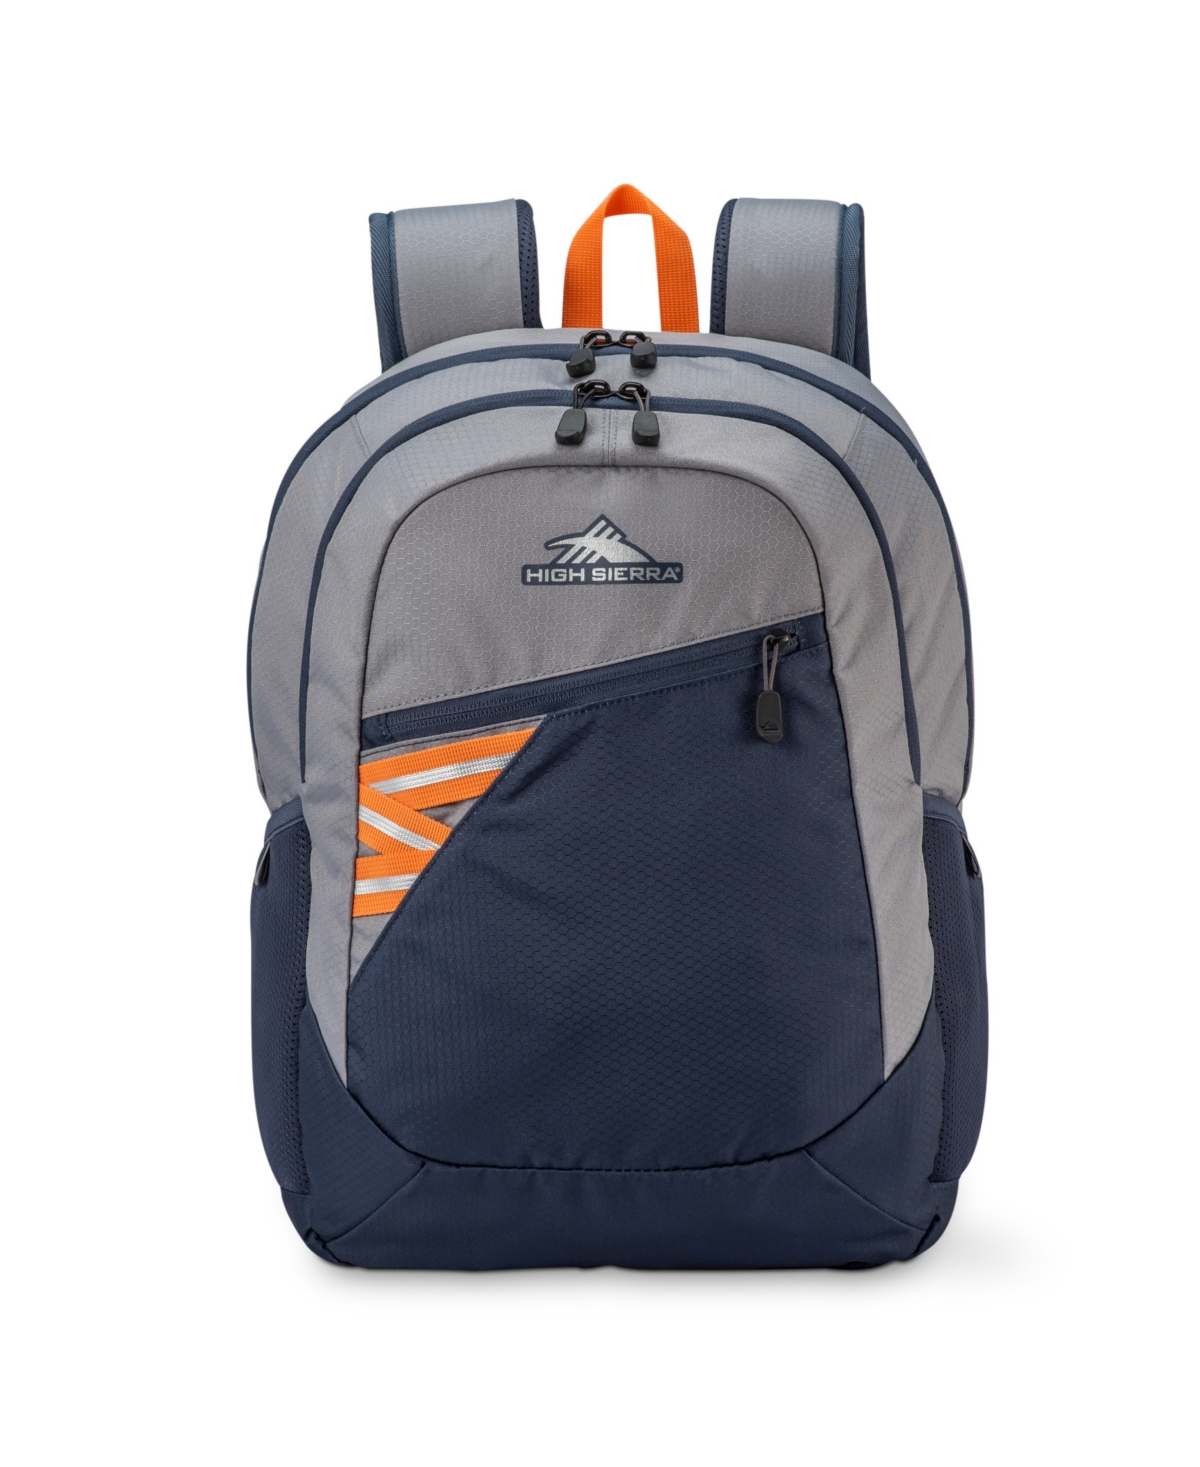 High Sierra Outburst 2.0 Backpack In Steel Gray,indigo Blue